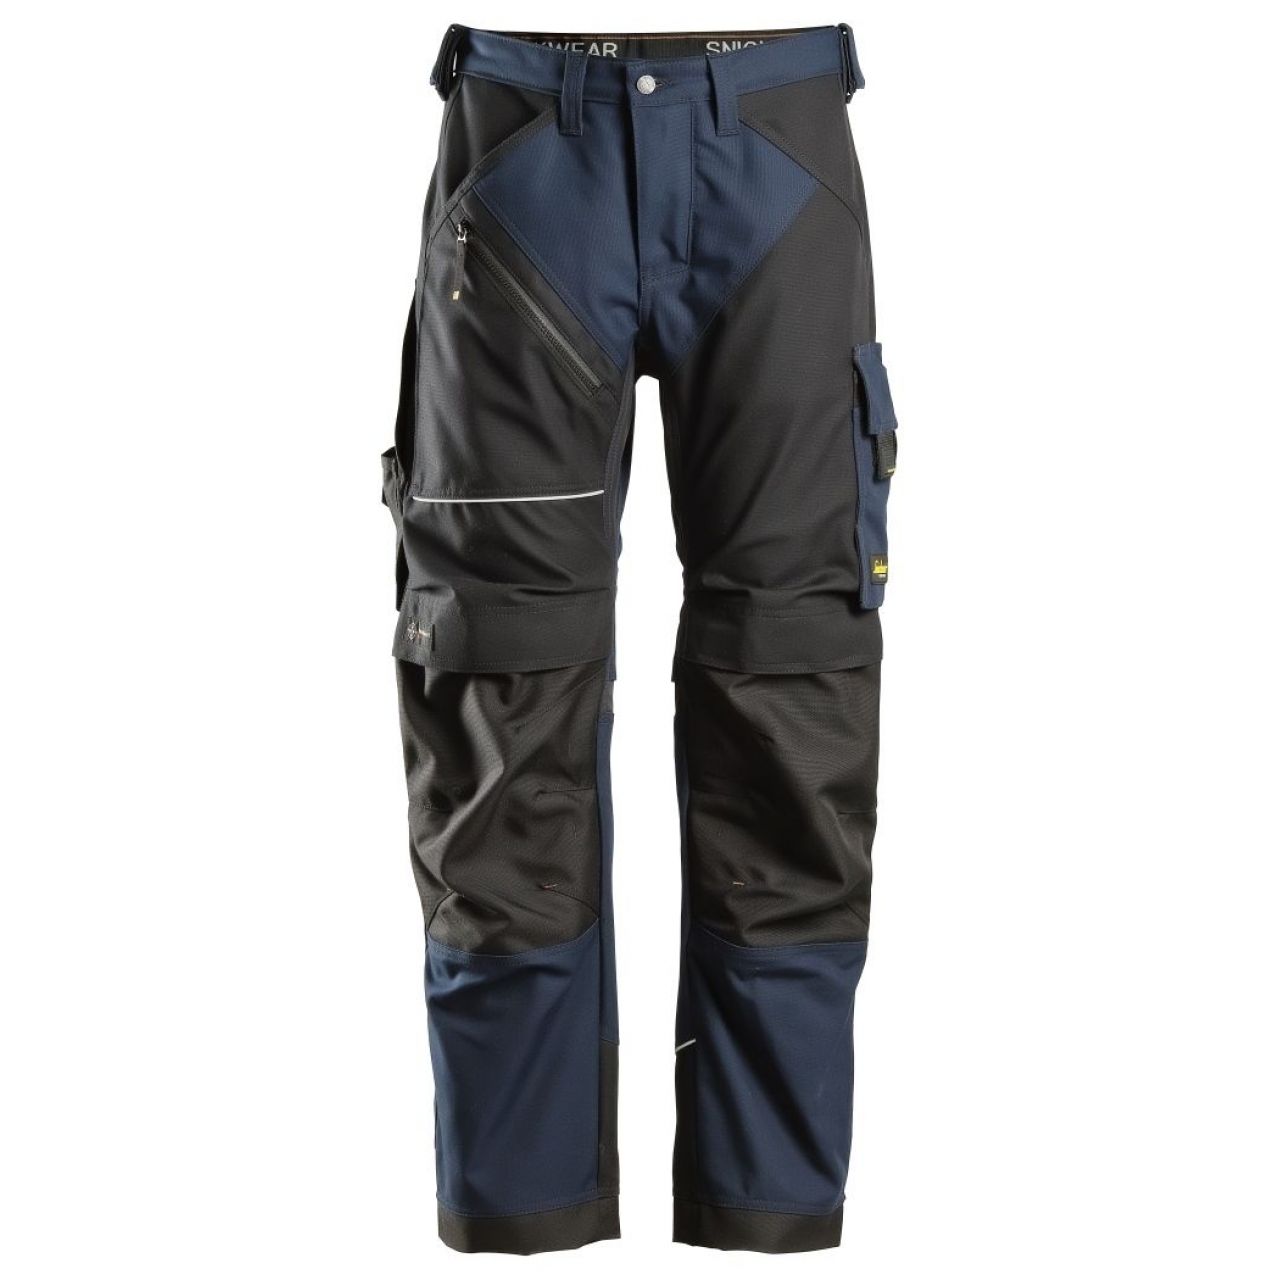 Pantalon Canvas+ RuffWork azul marino-negro talla 054